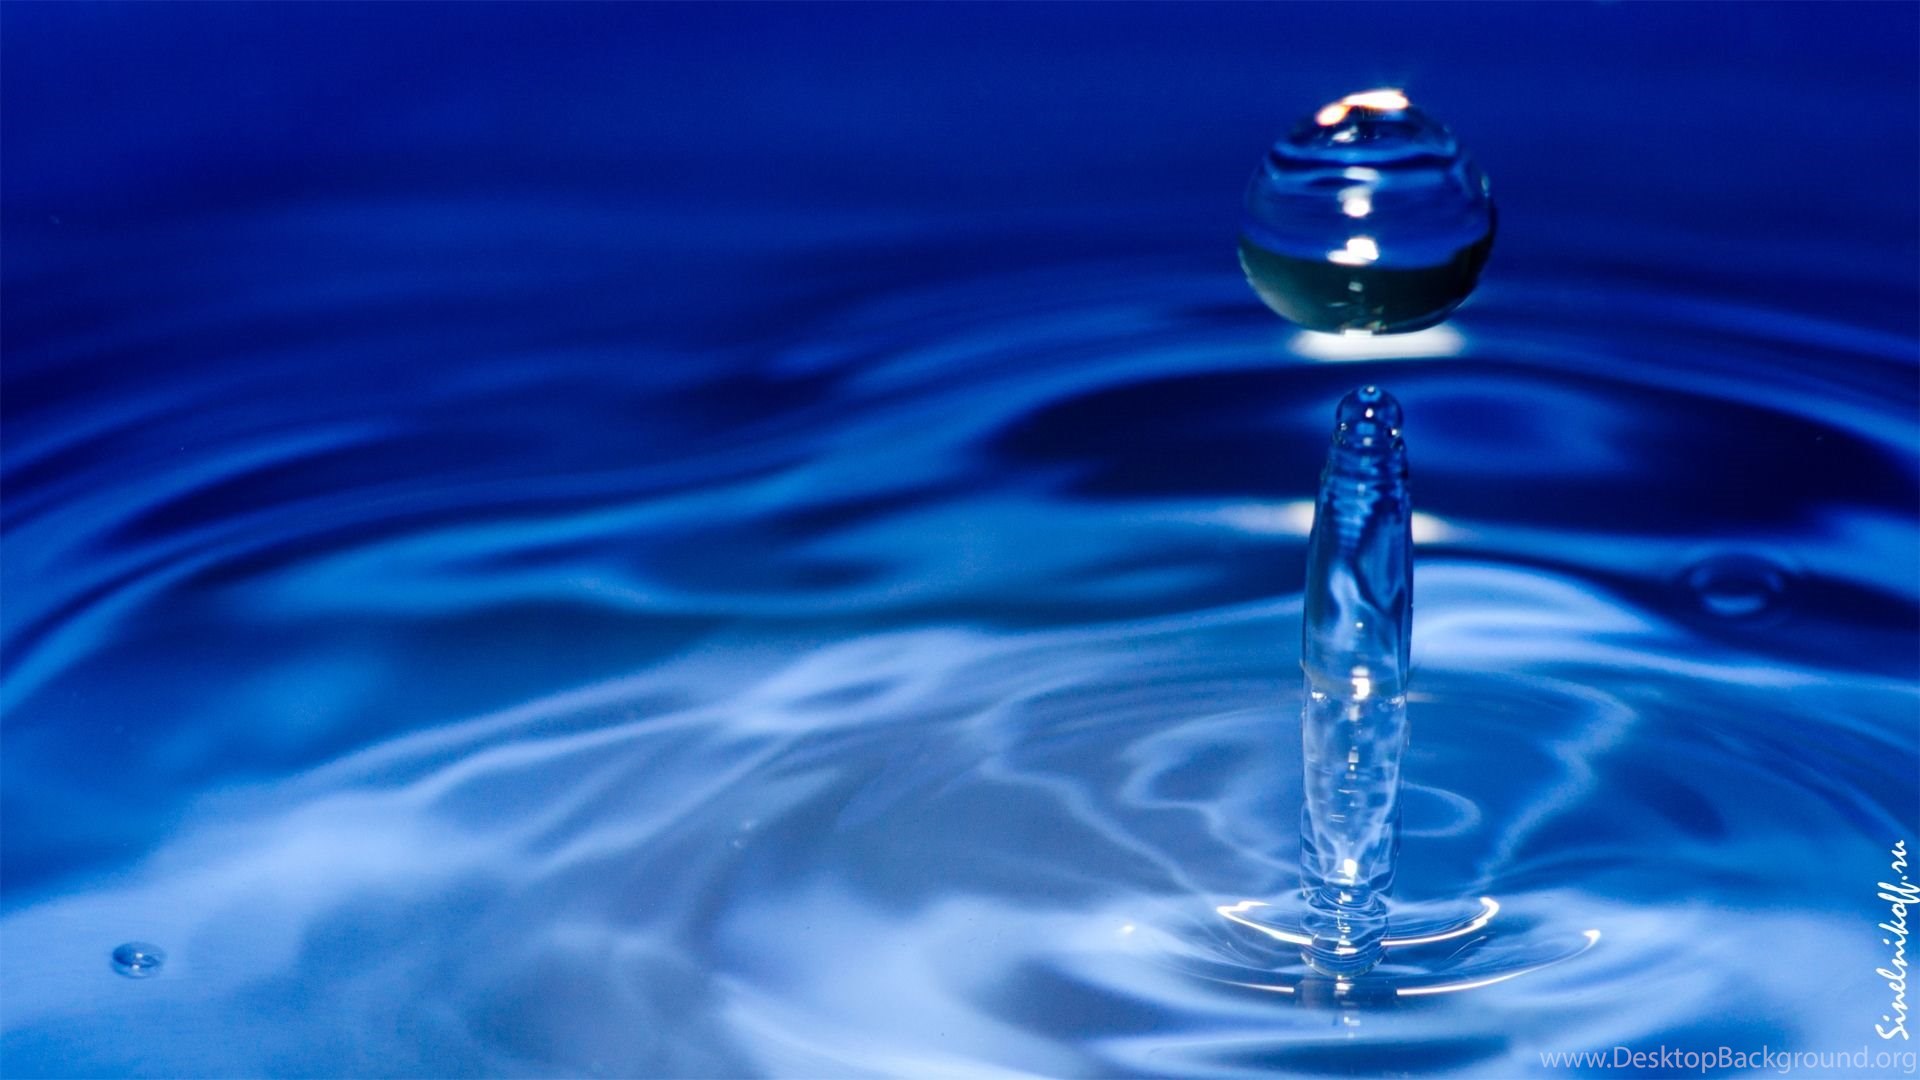 Картинка вода 4. Красивая вода. Вода фон. Вода картинки. Синяя вода.